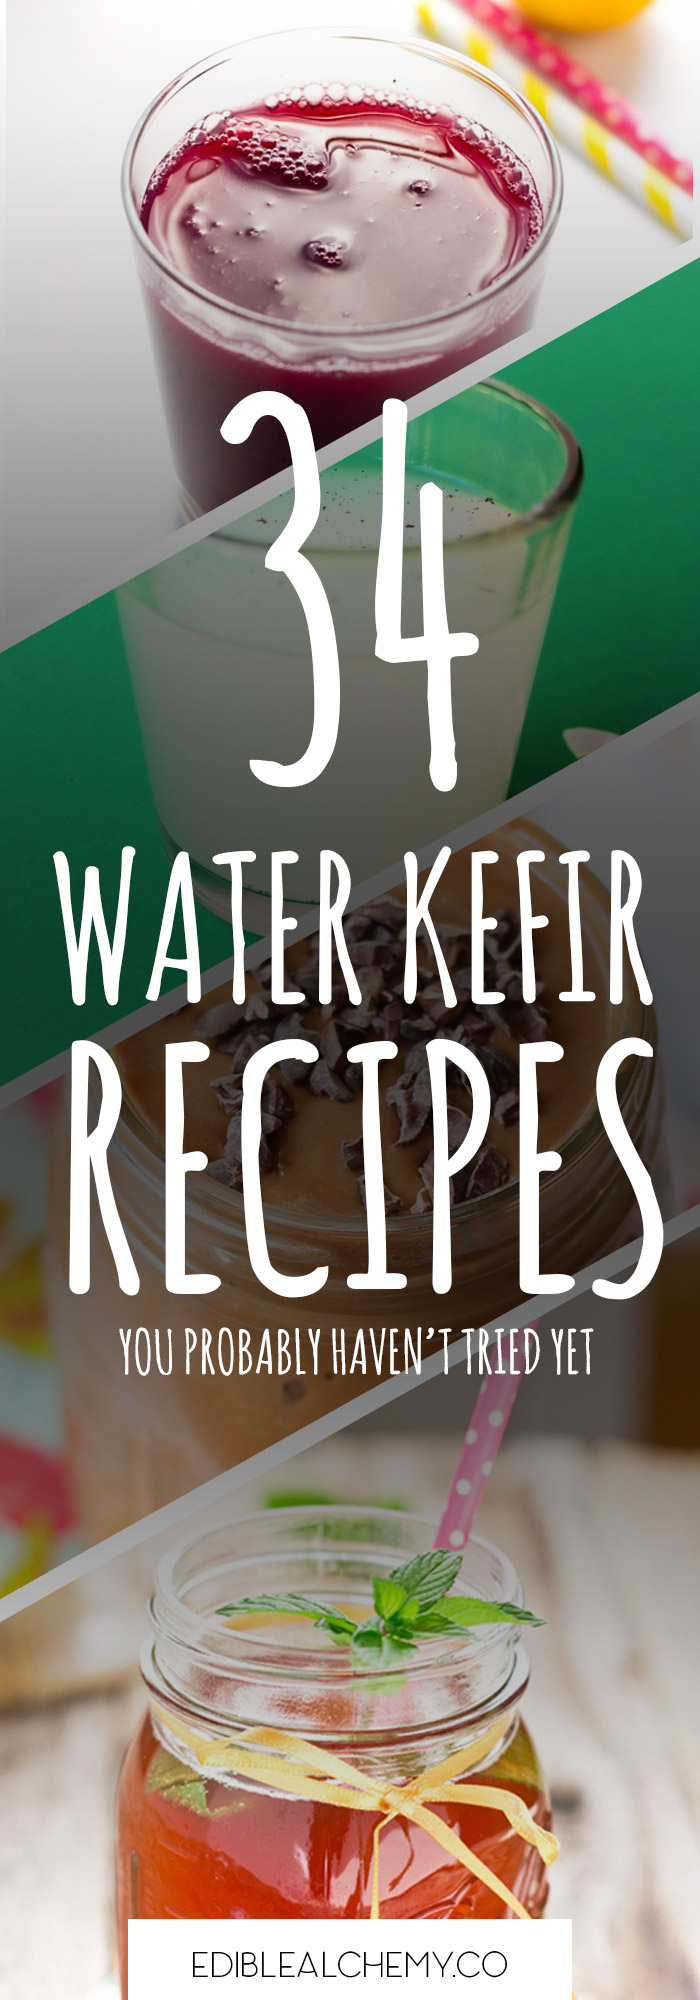 34 water kefir recipes